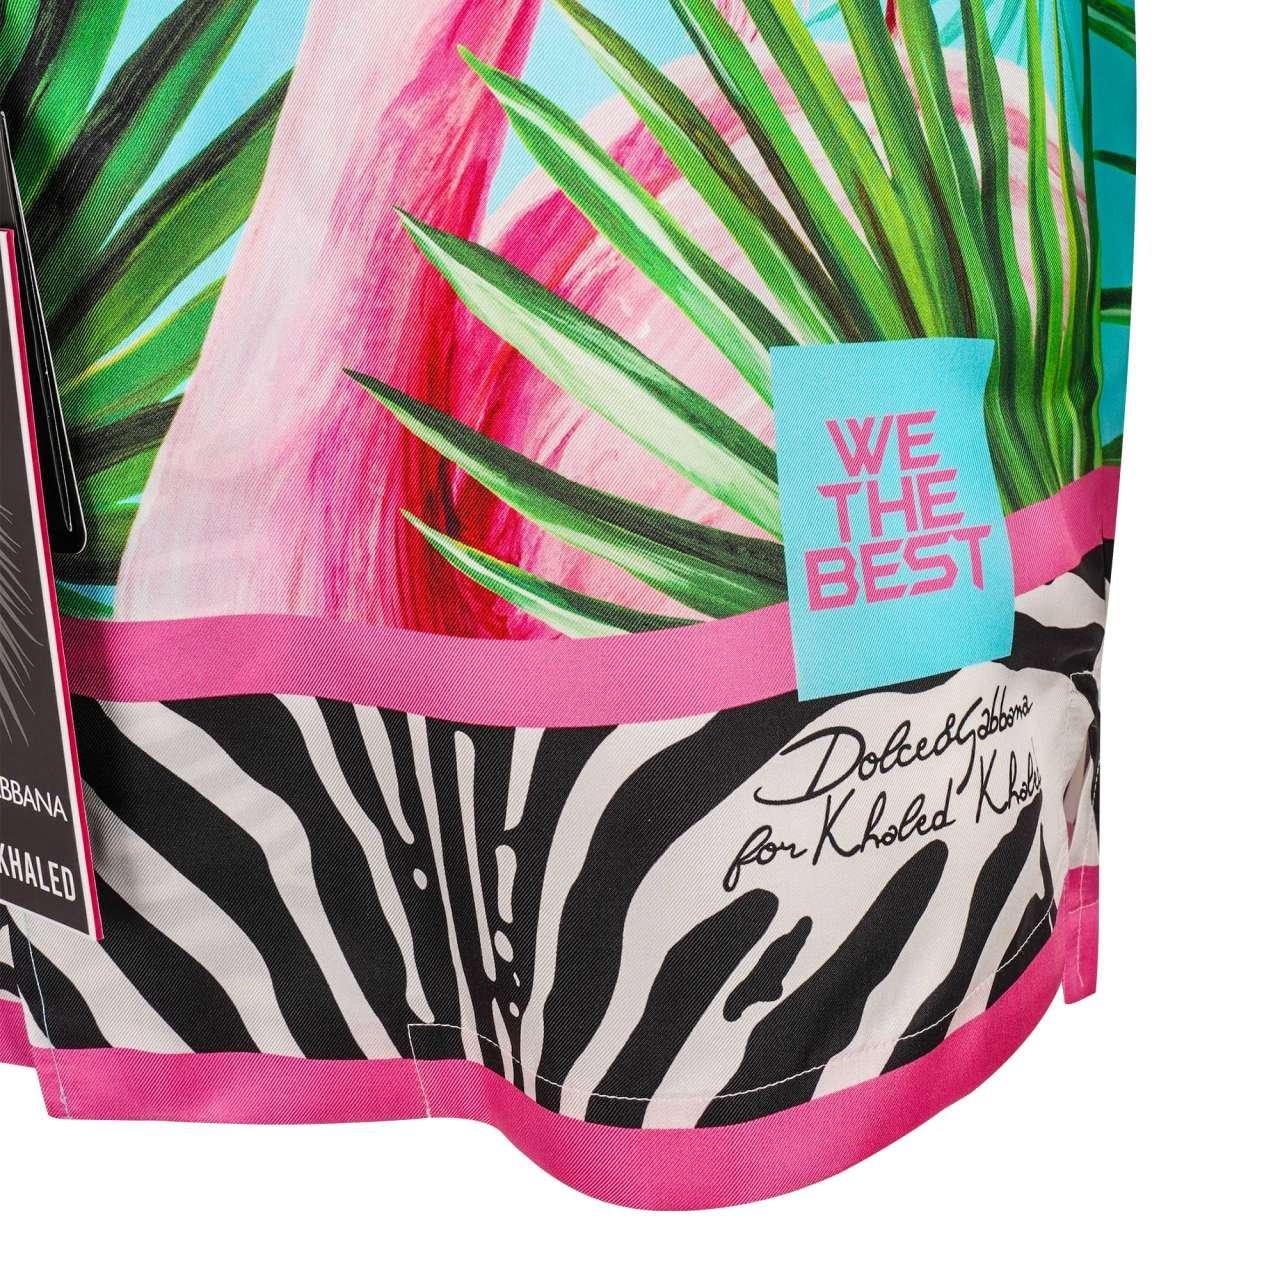 Men's Dolce & Gabbana - DJ Khaled Silk Flamingo Zebra Shirt with Sunglasses and CD 41 For Sale